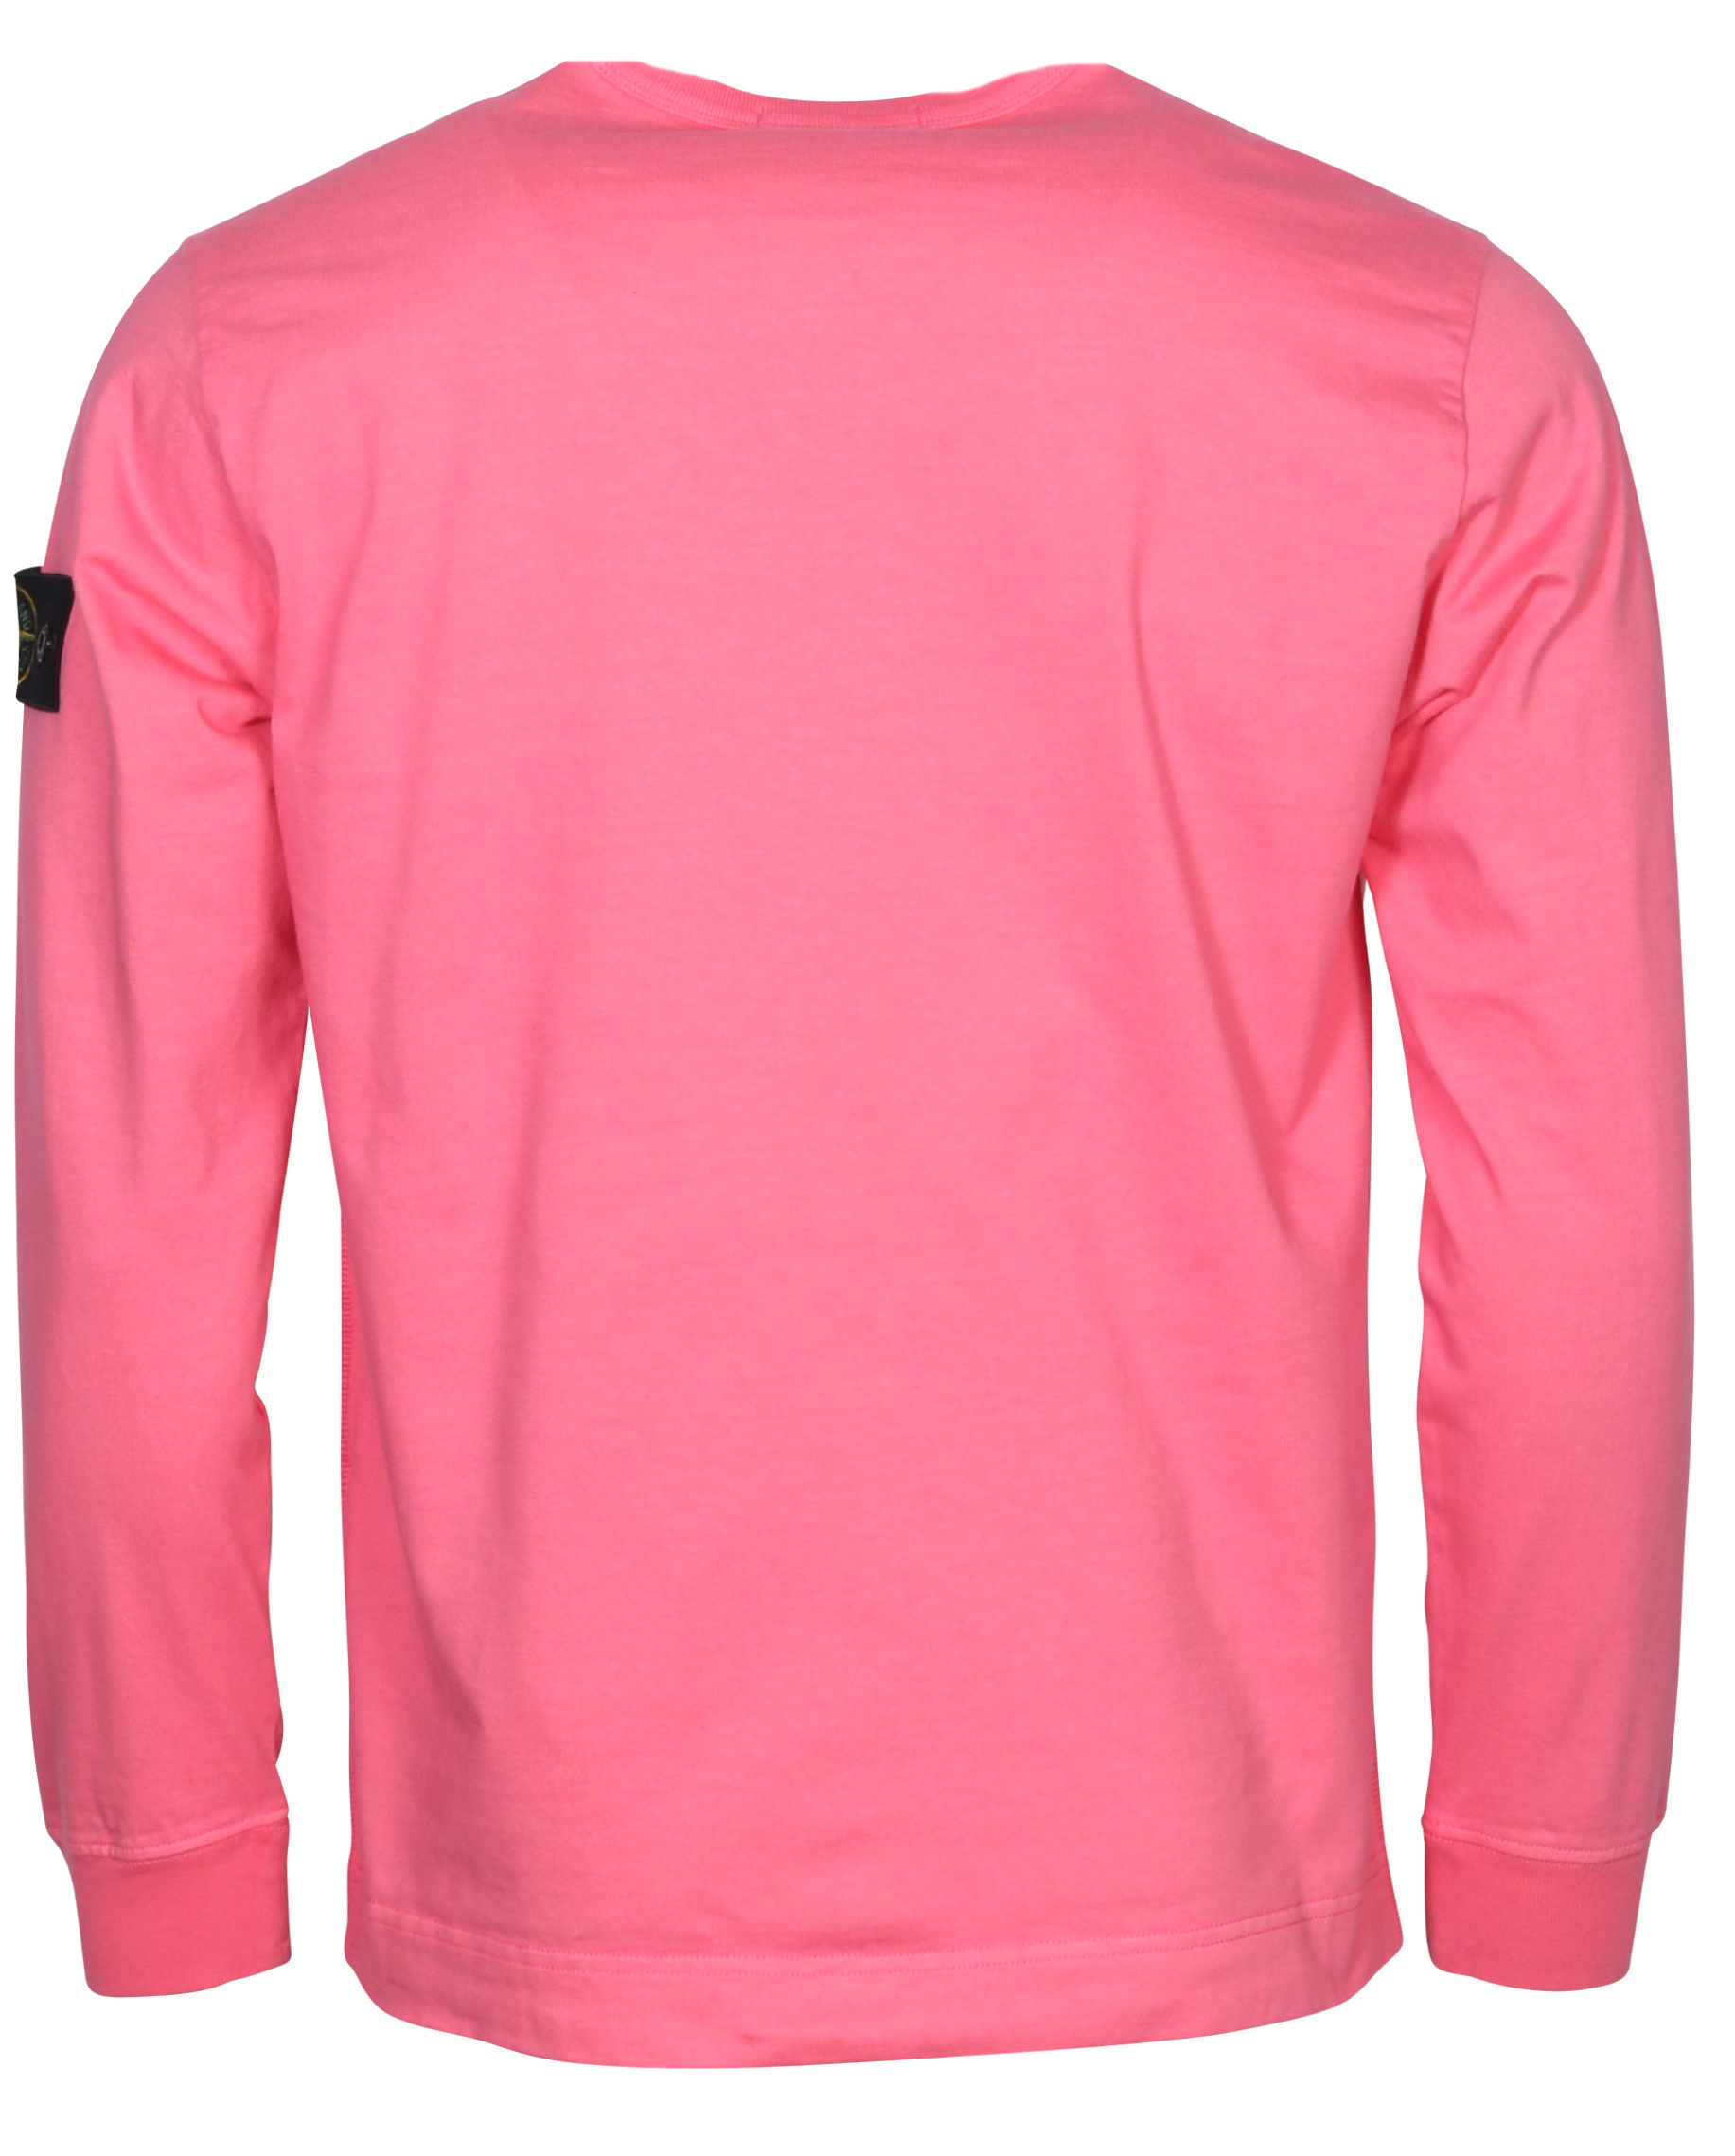 Stone Island Sweatshirt Pink S